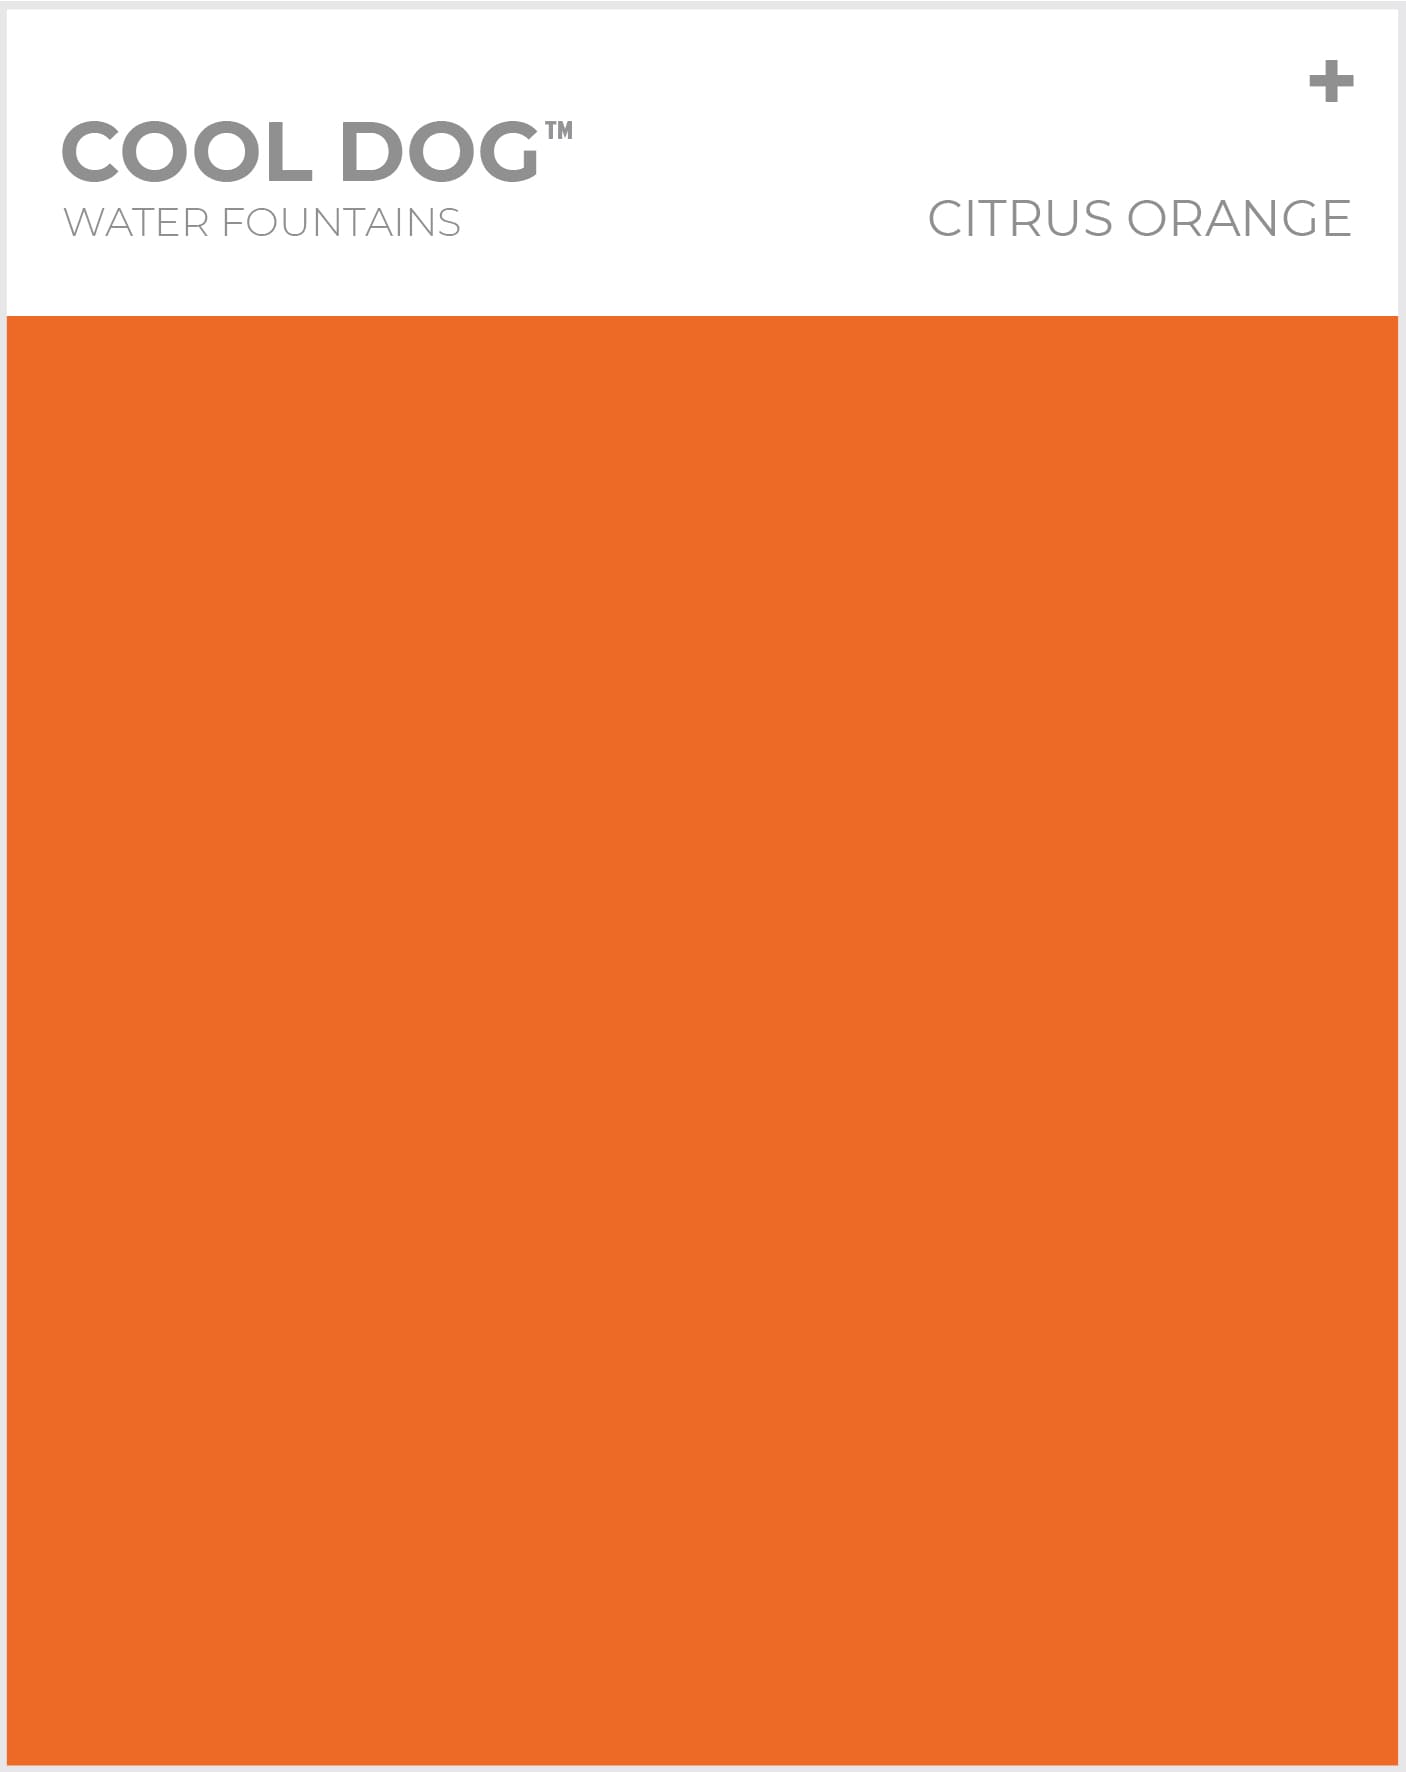 Cool Dog Water Fountains - Citrus Orange